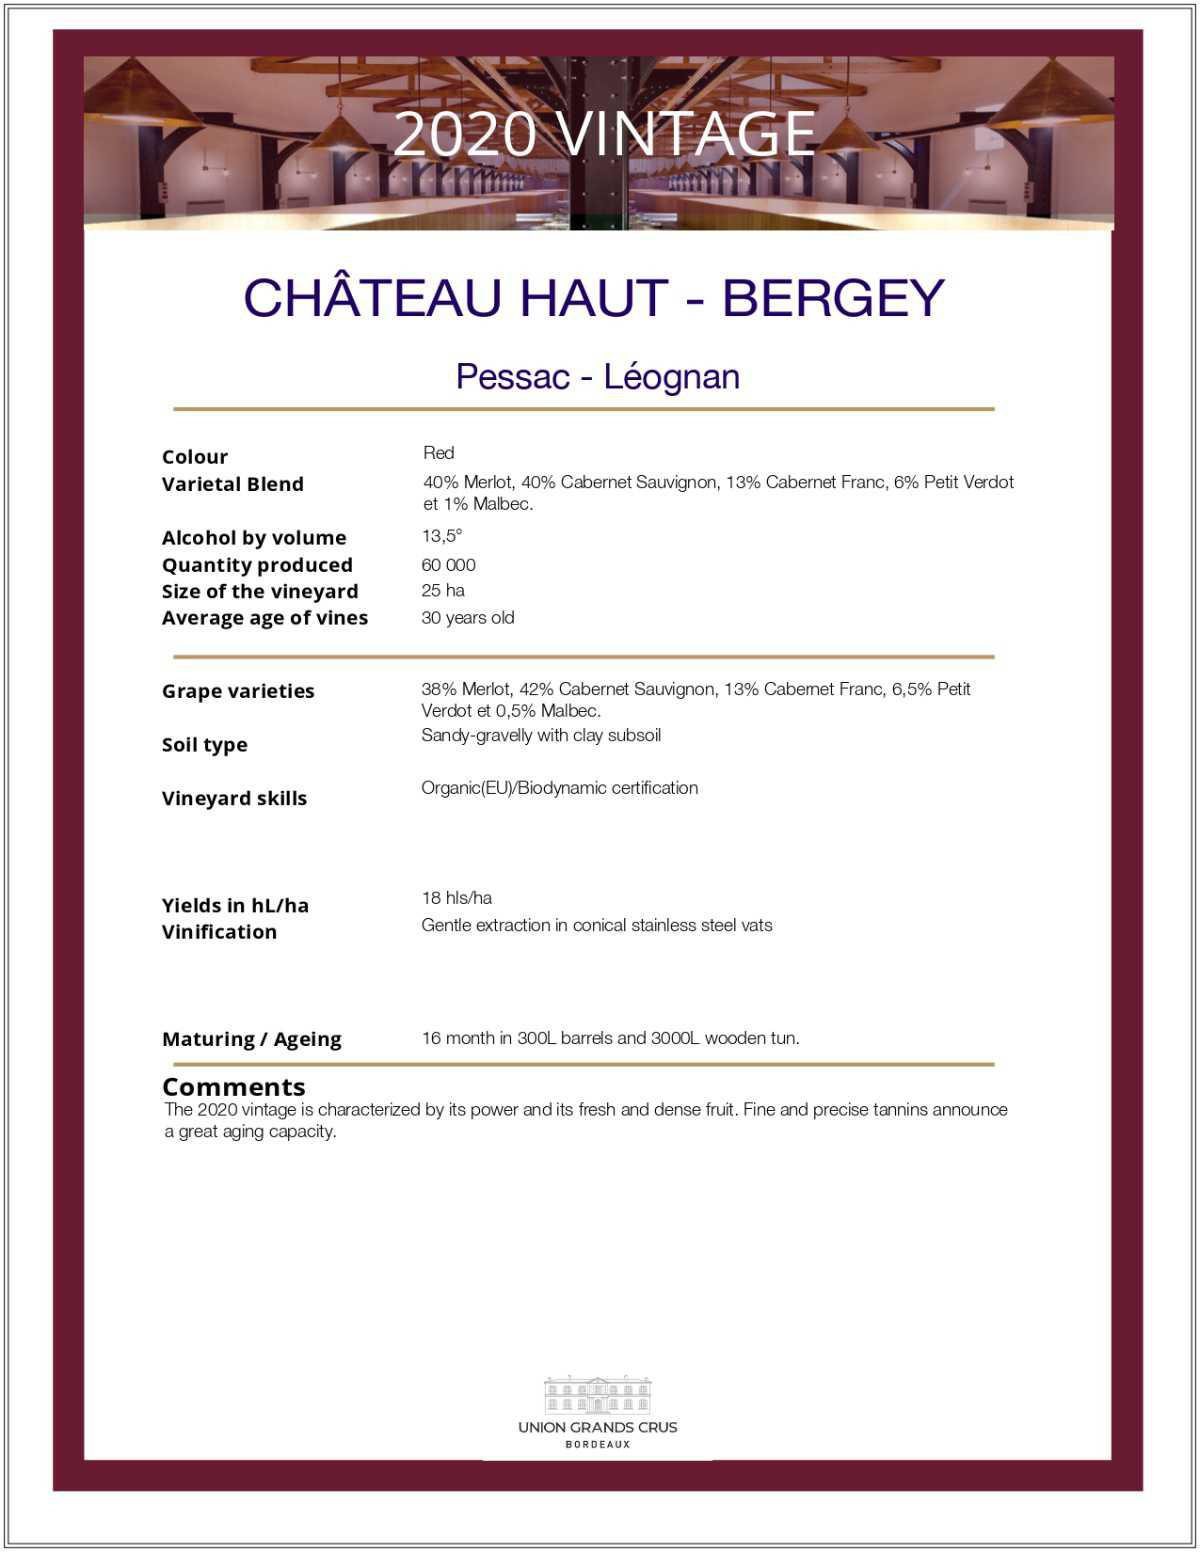 Château Haut - Bergey - Red